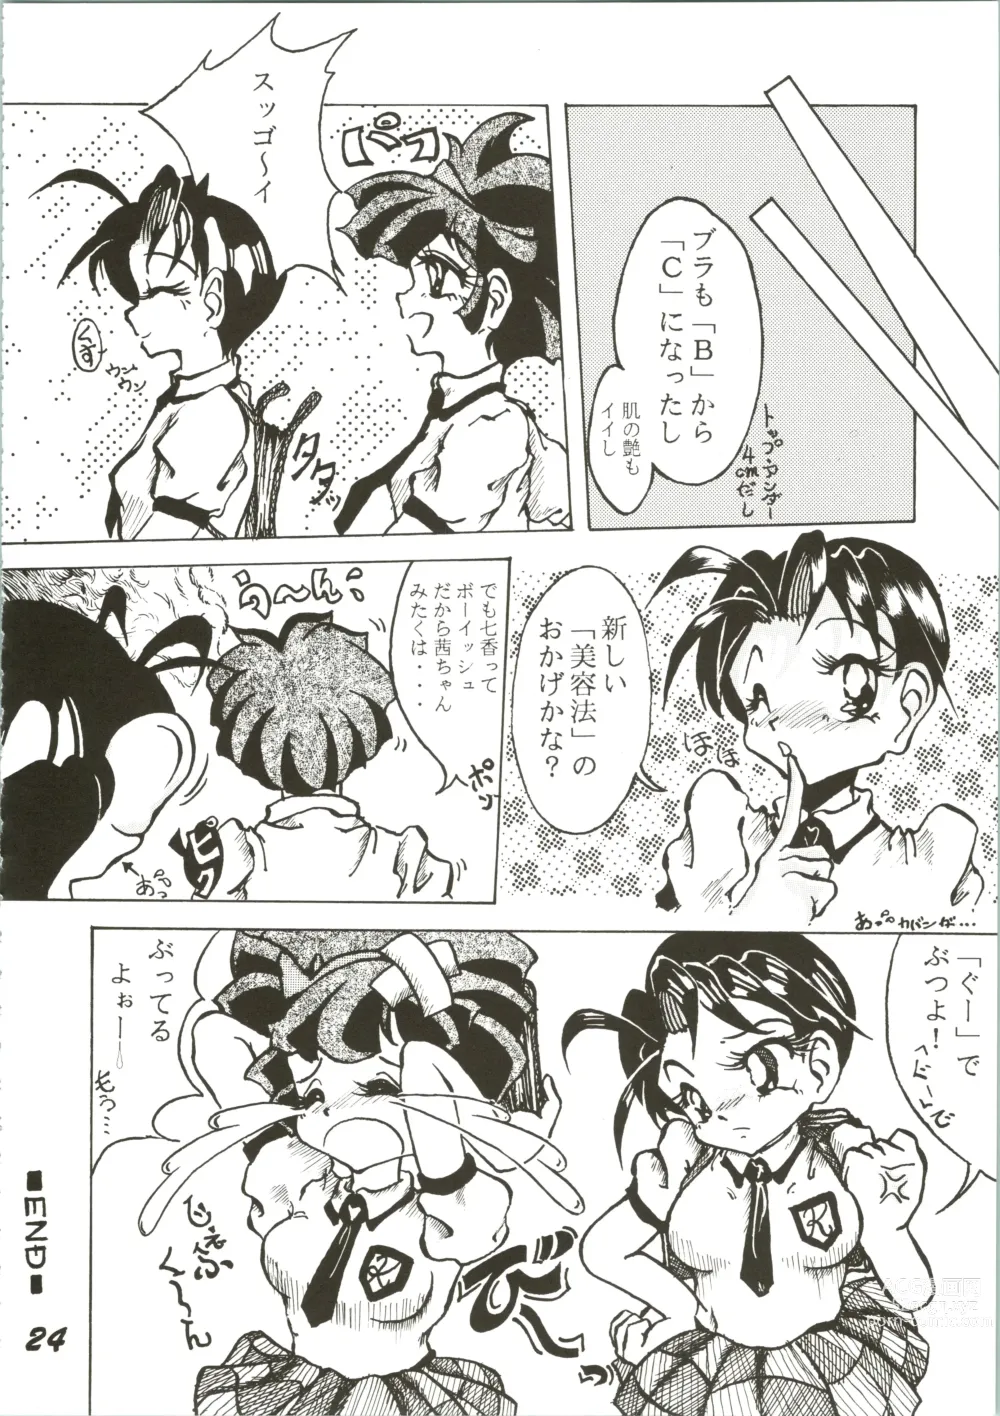 Page 24 of doujinshi OVA SPIRITS